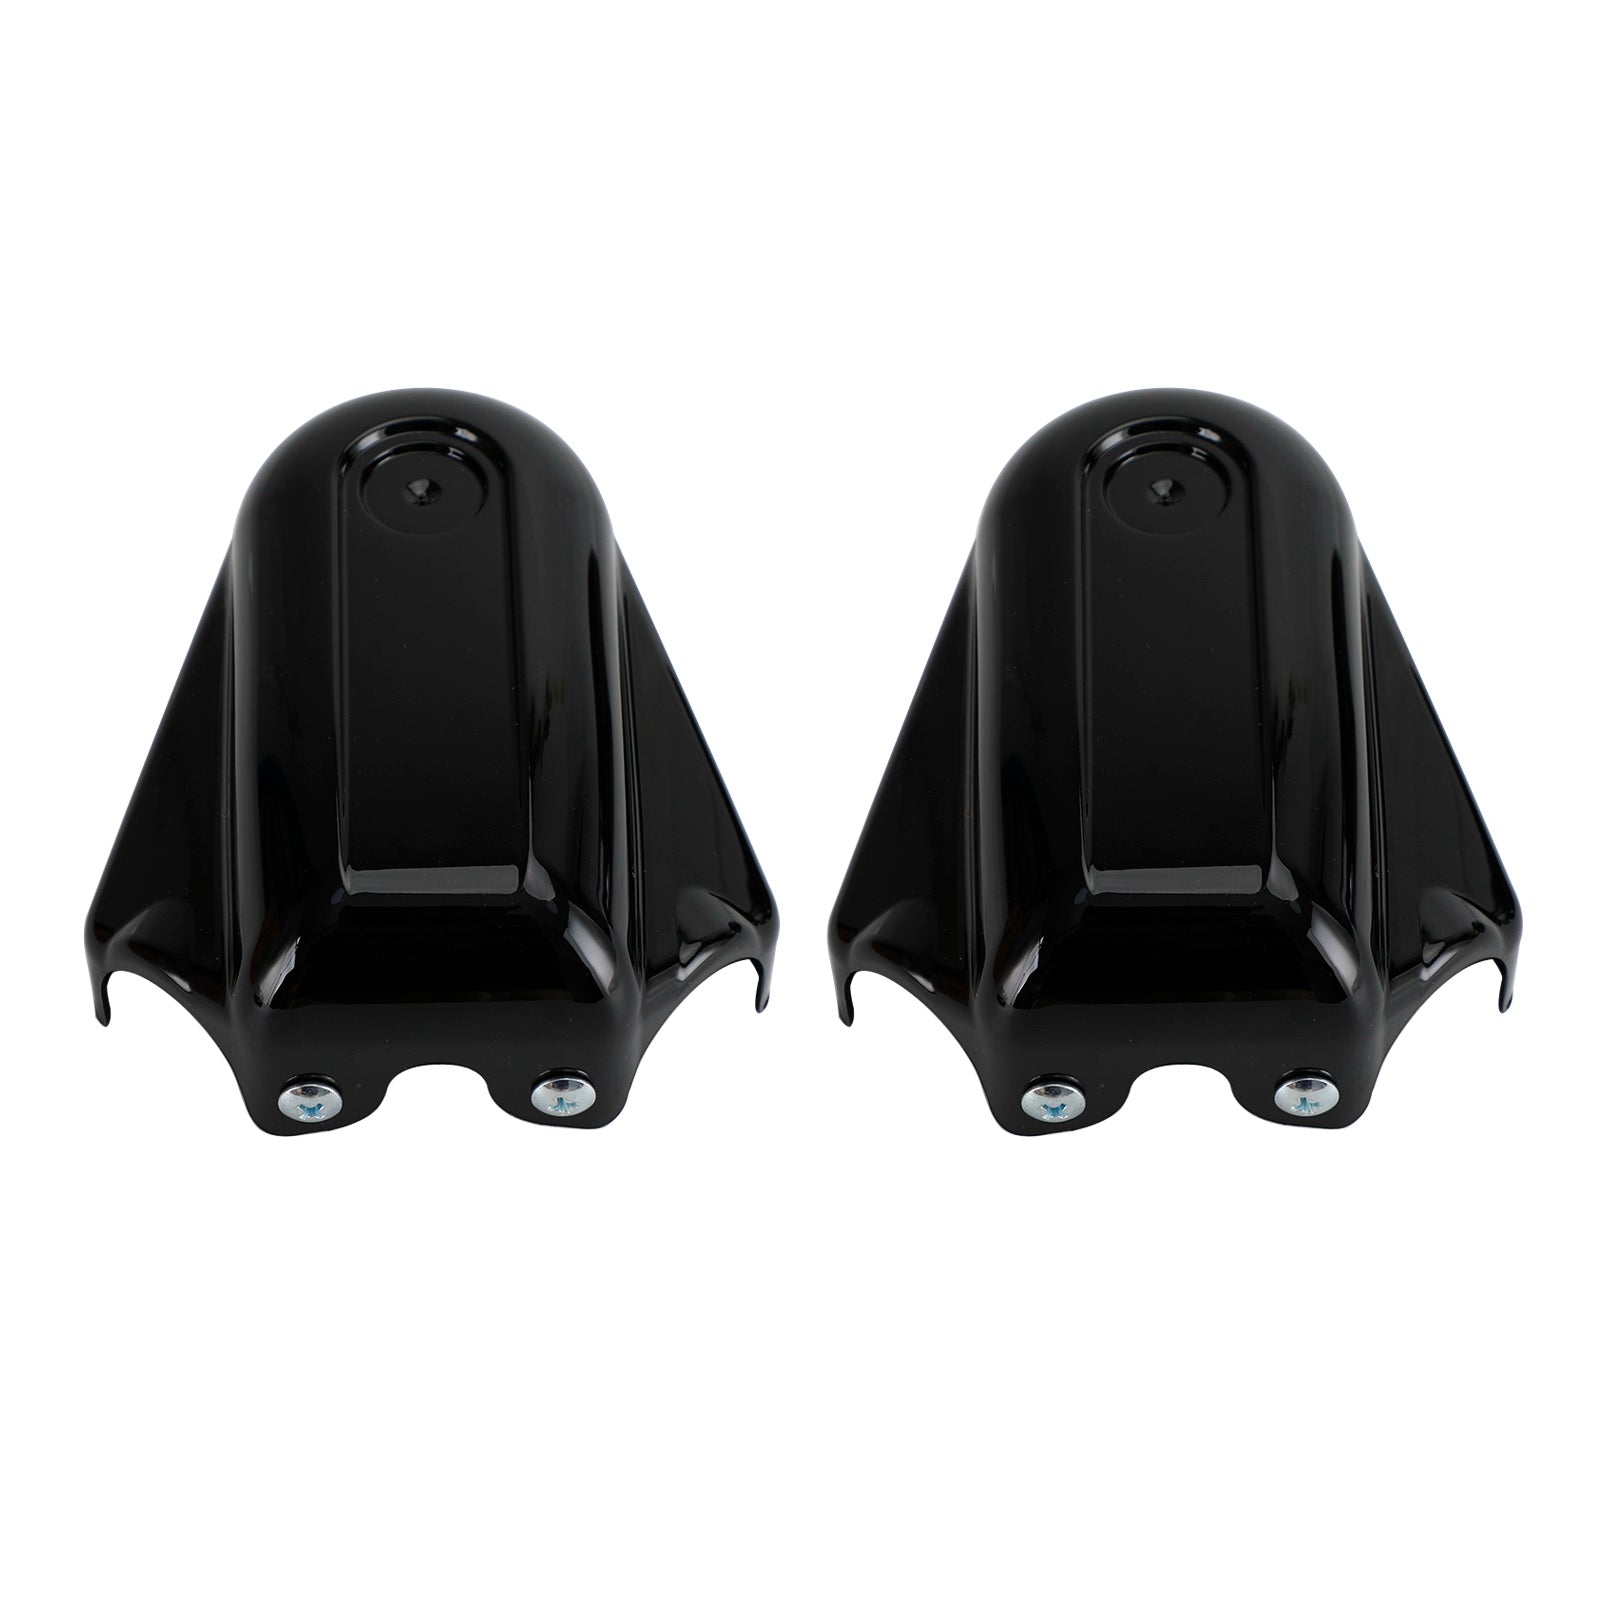 Bar Shield asse posteriore coperture forcellone per Softail FLS FLSTN 2008-2020